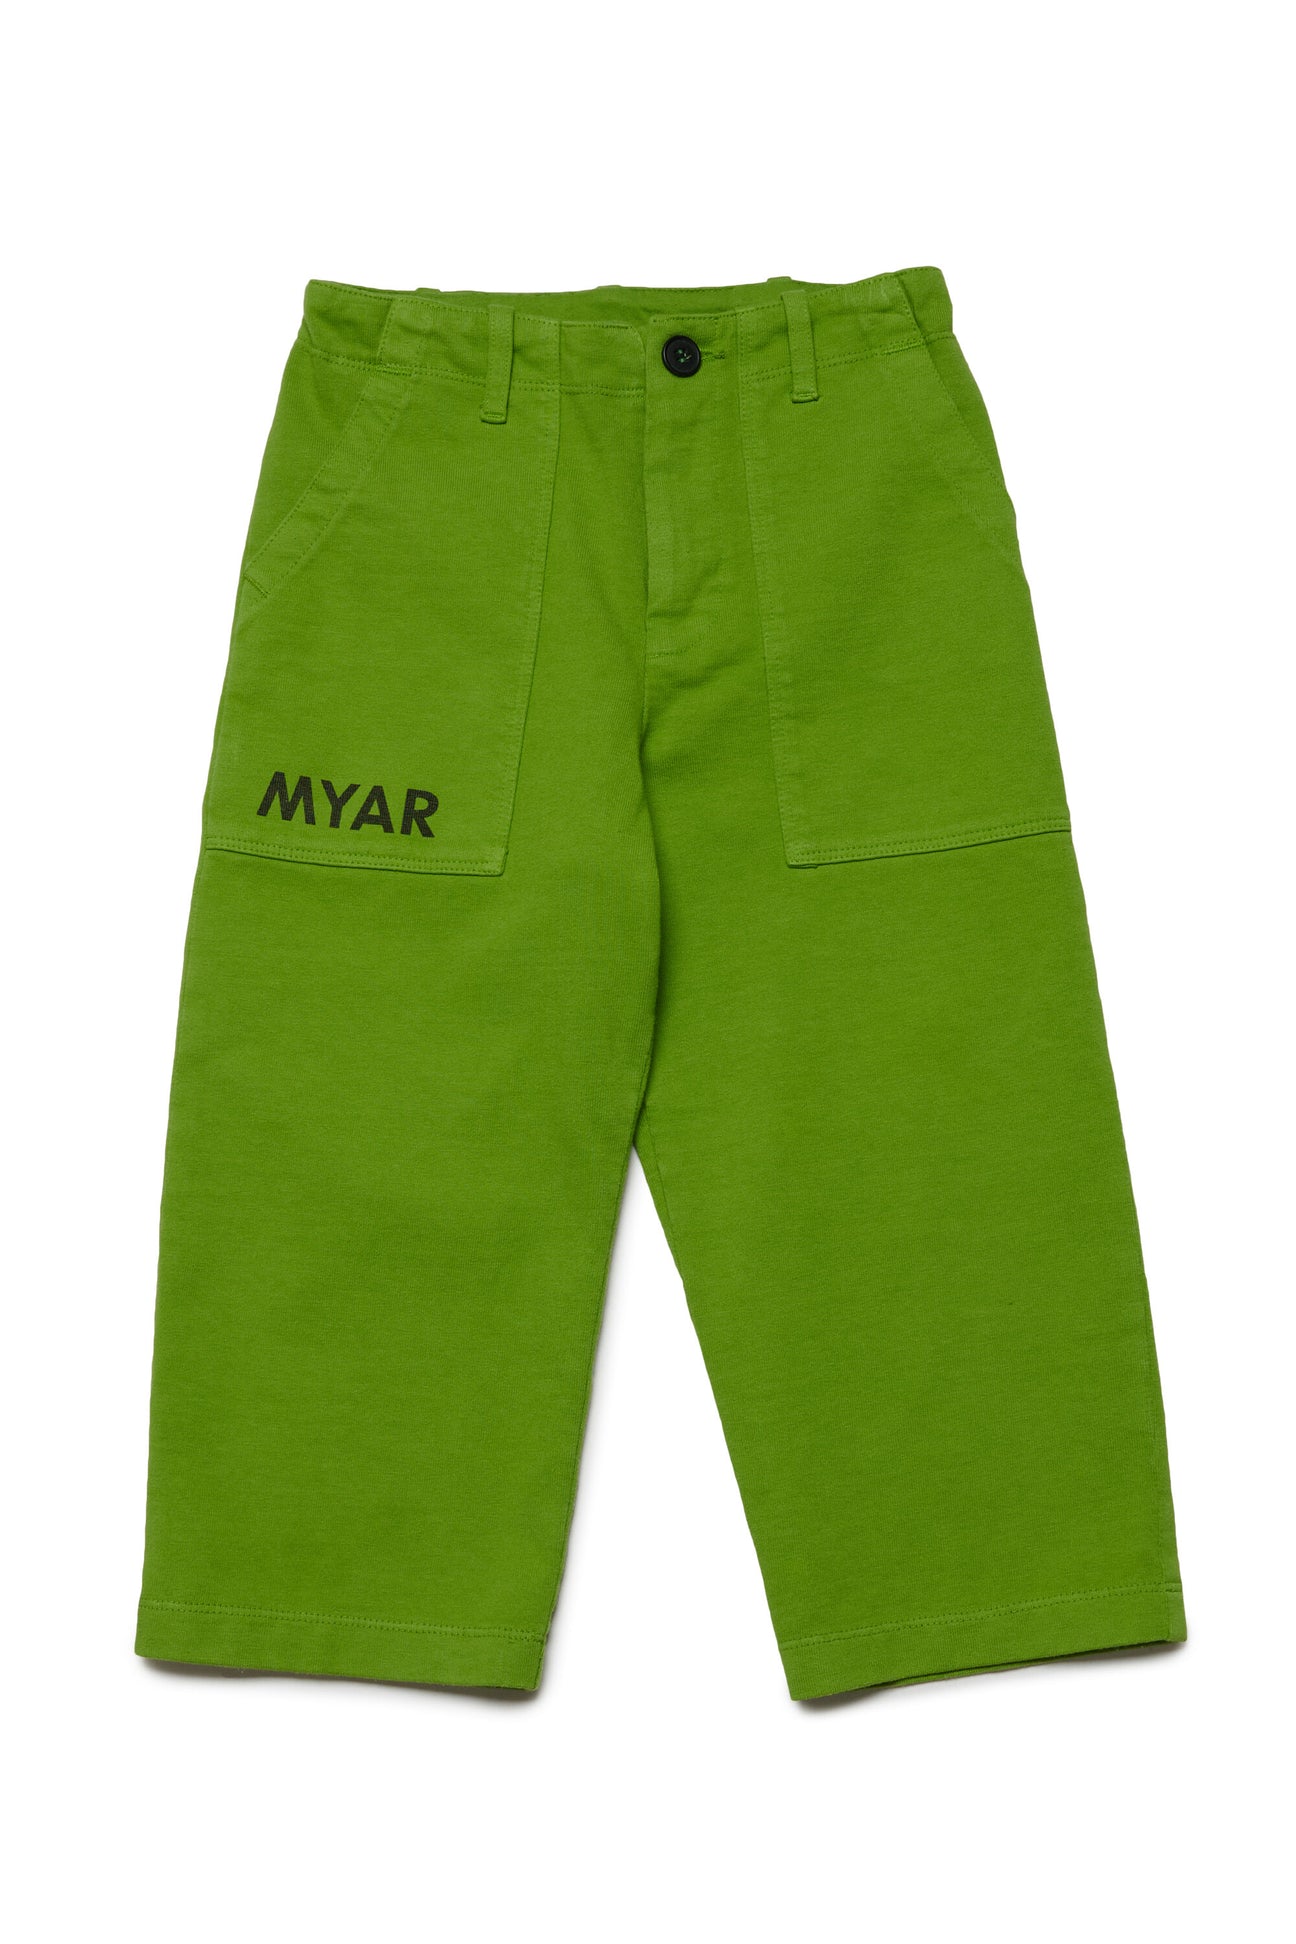 Pantalone utility con logo MYAR Pantalone utility con logo MYAR